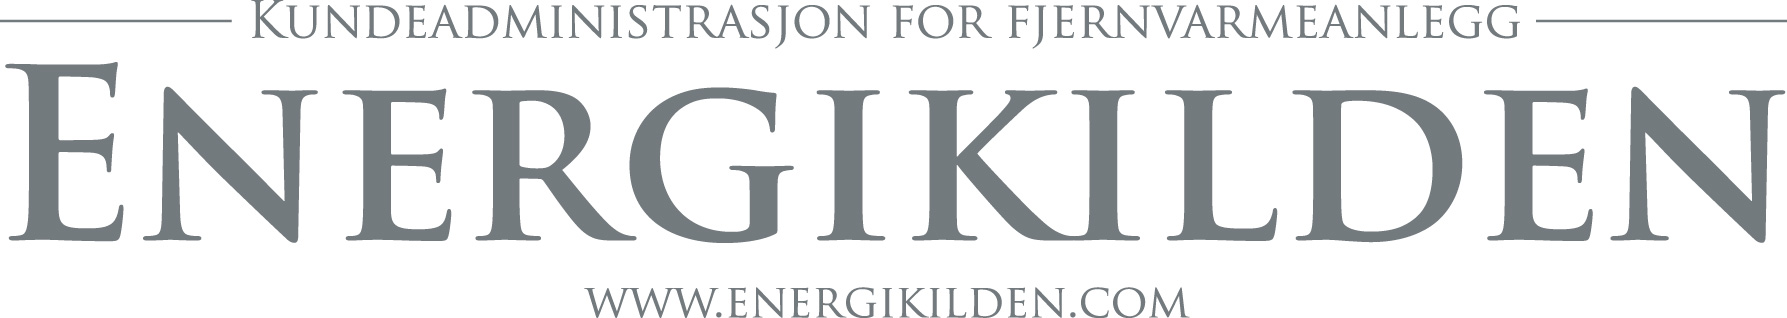 Energikildens logo